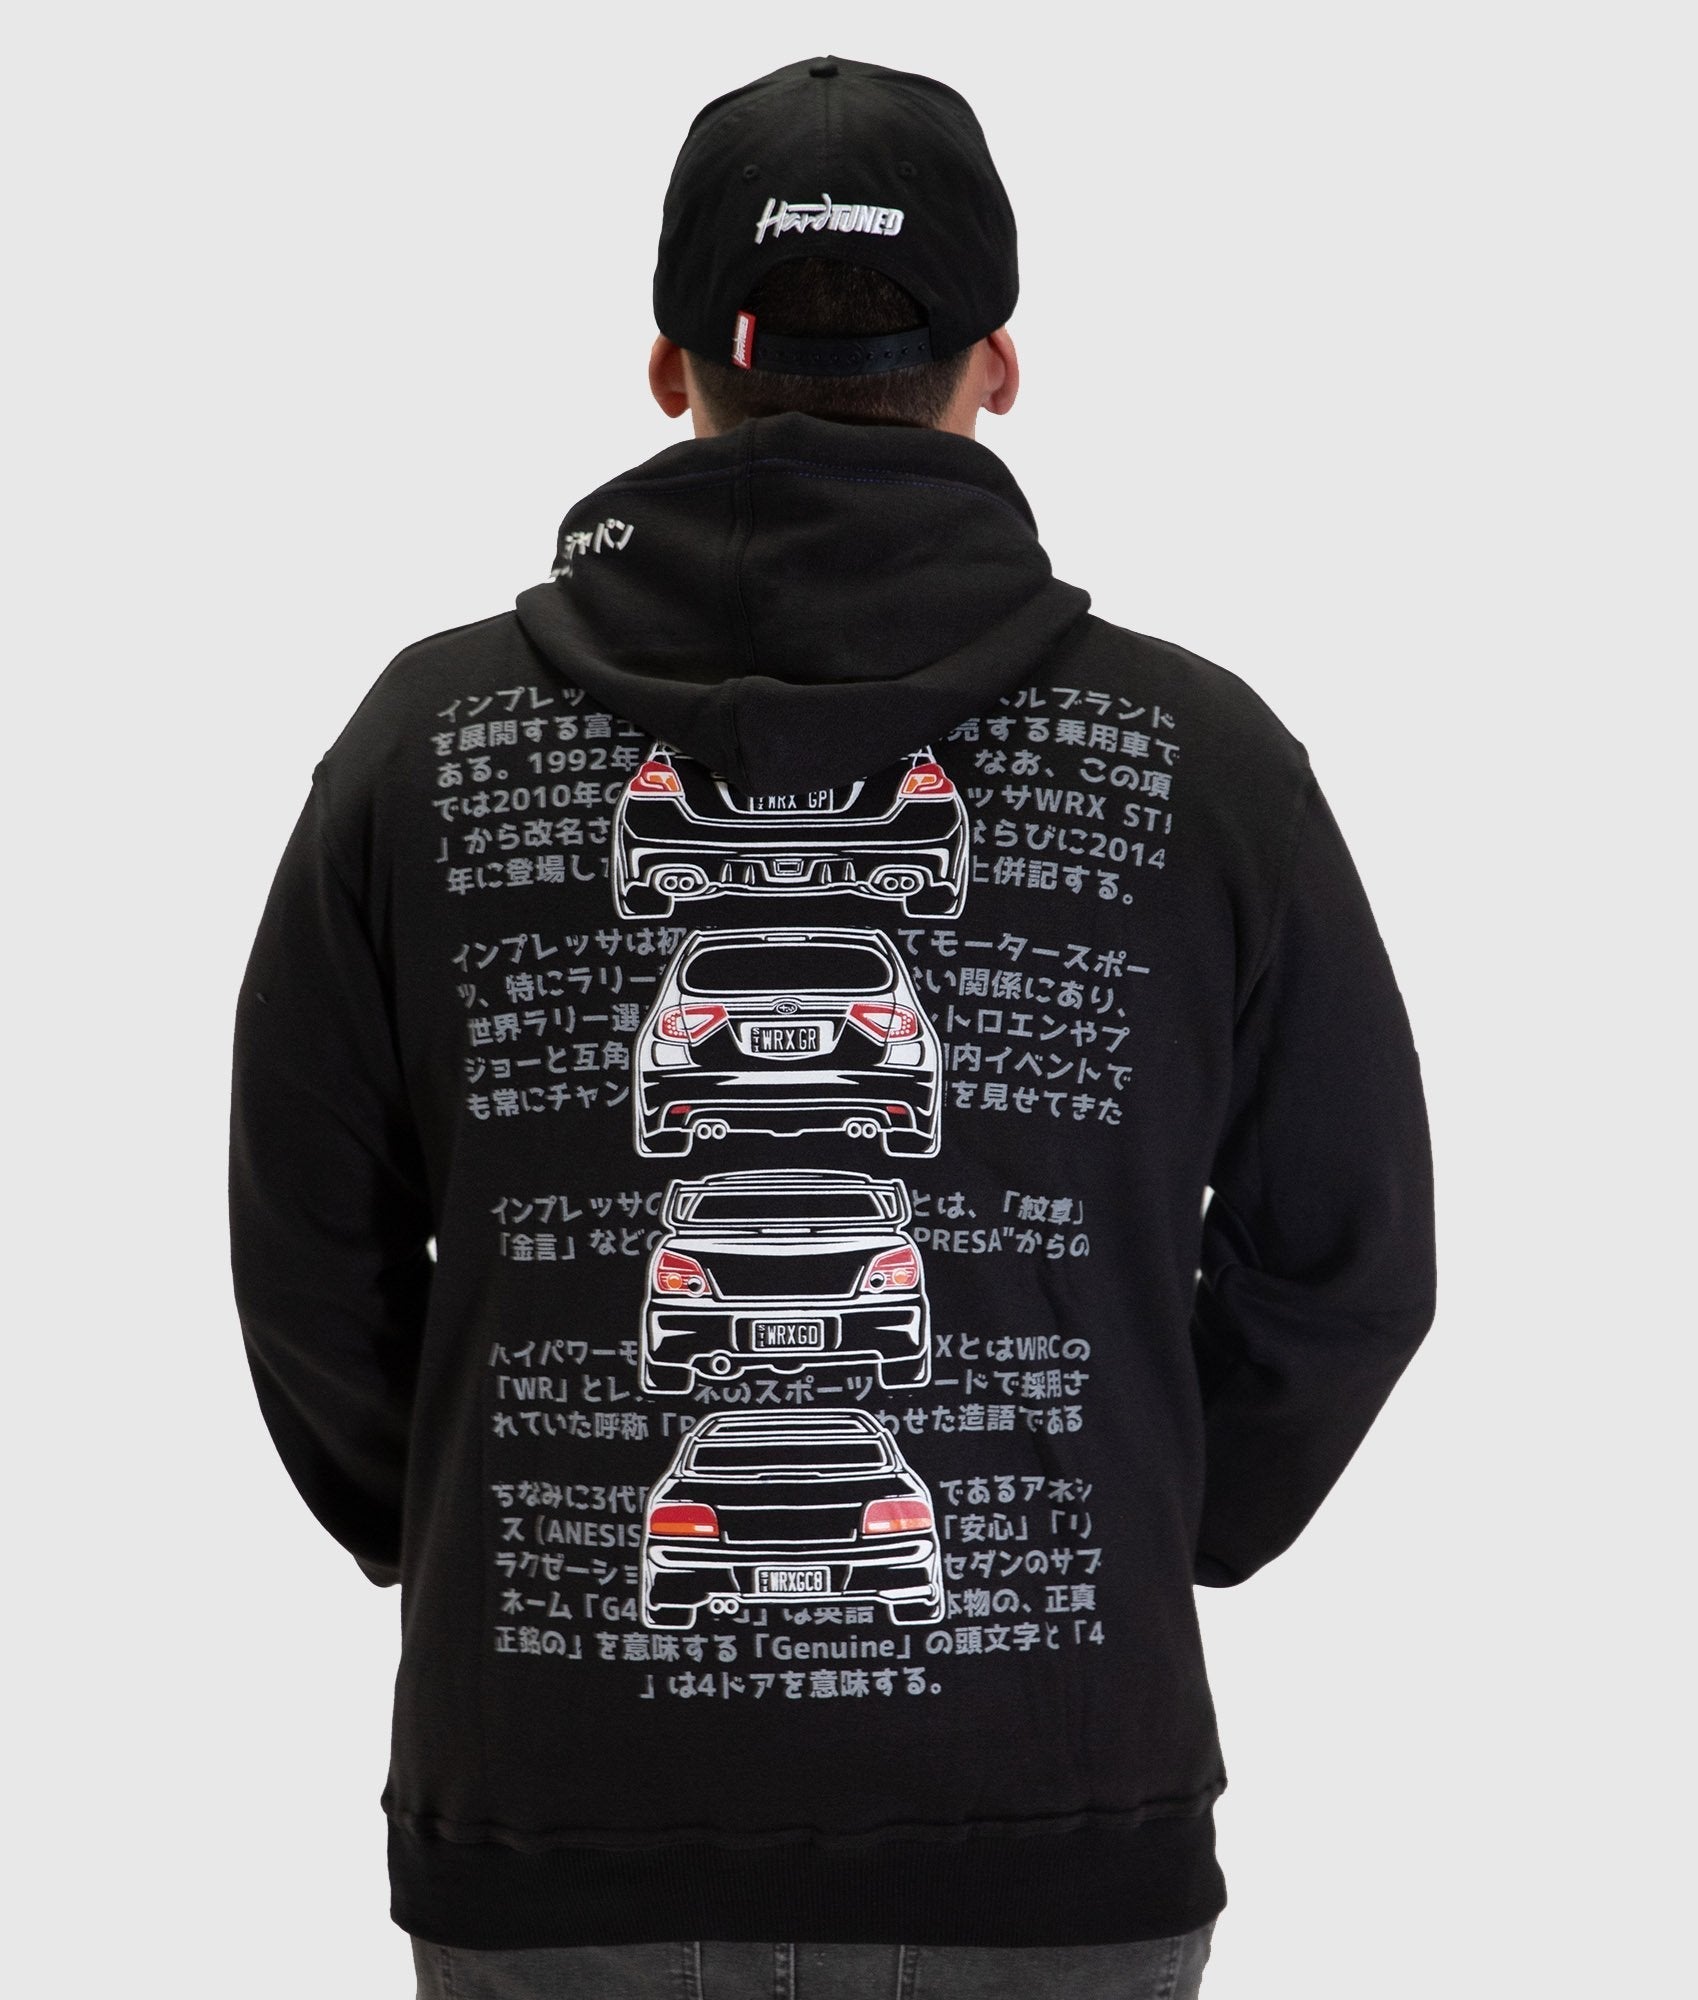 Subaru One Love Hoodie - Driver Apparel